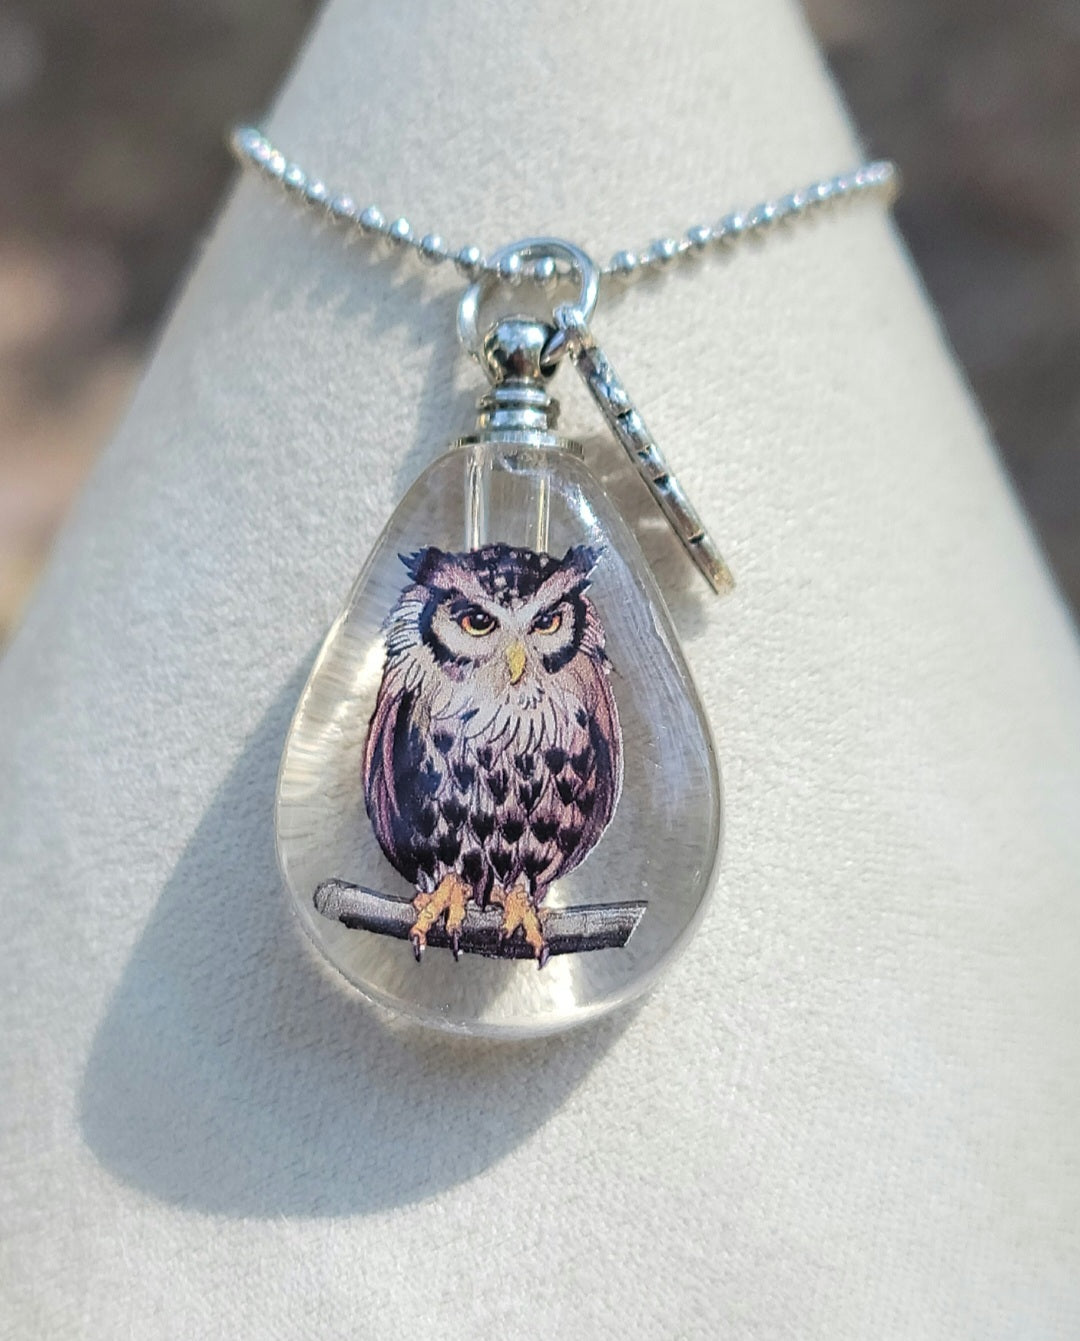 Silver Owl Cremation Jewelry Urn with Rhinestones - Urn Keychain